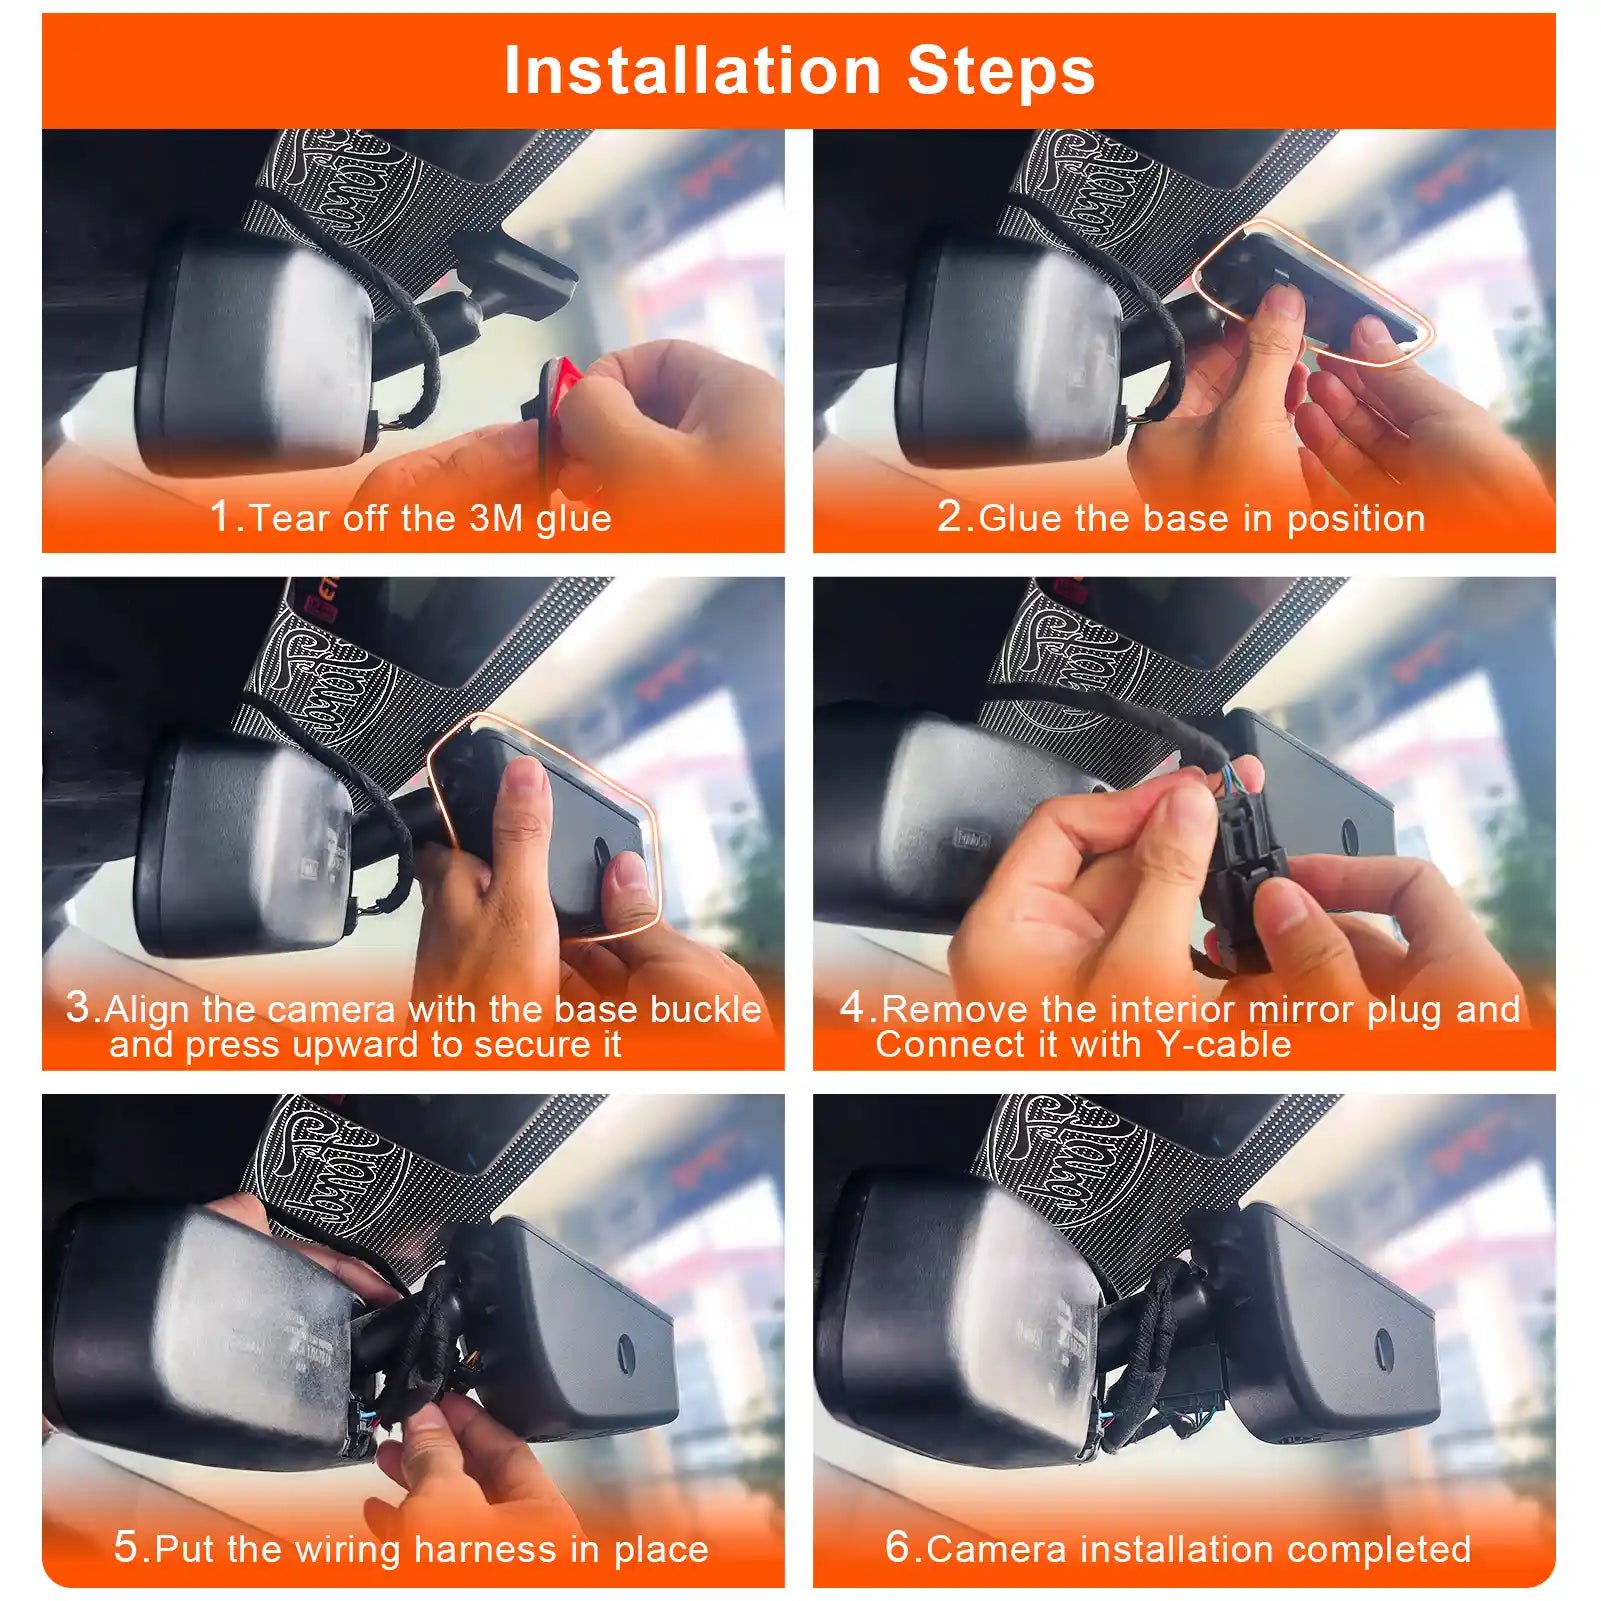 Ford Taurus dash cam installation steps